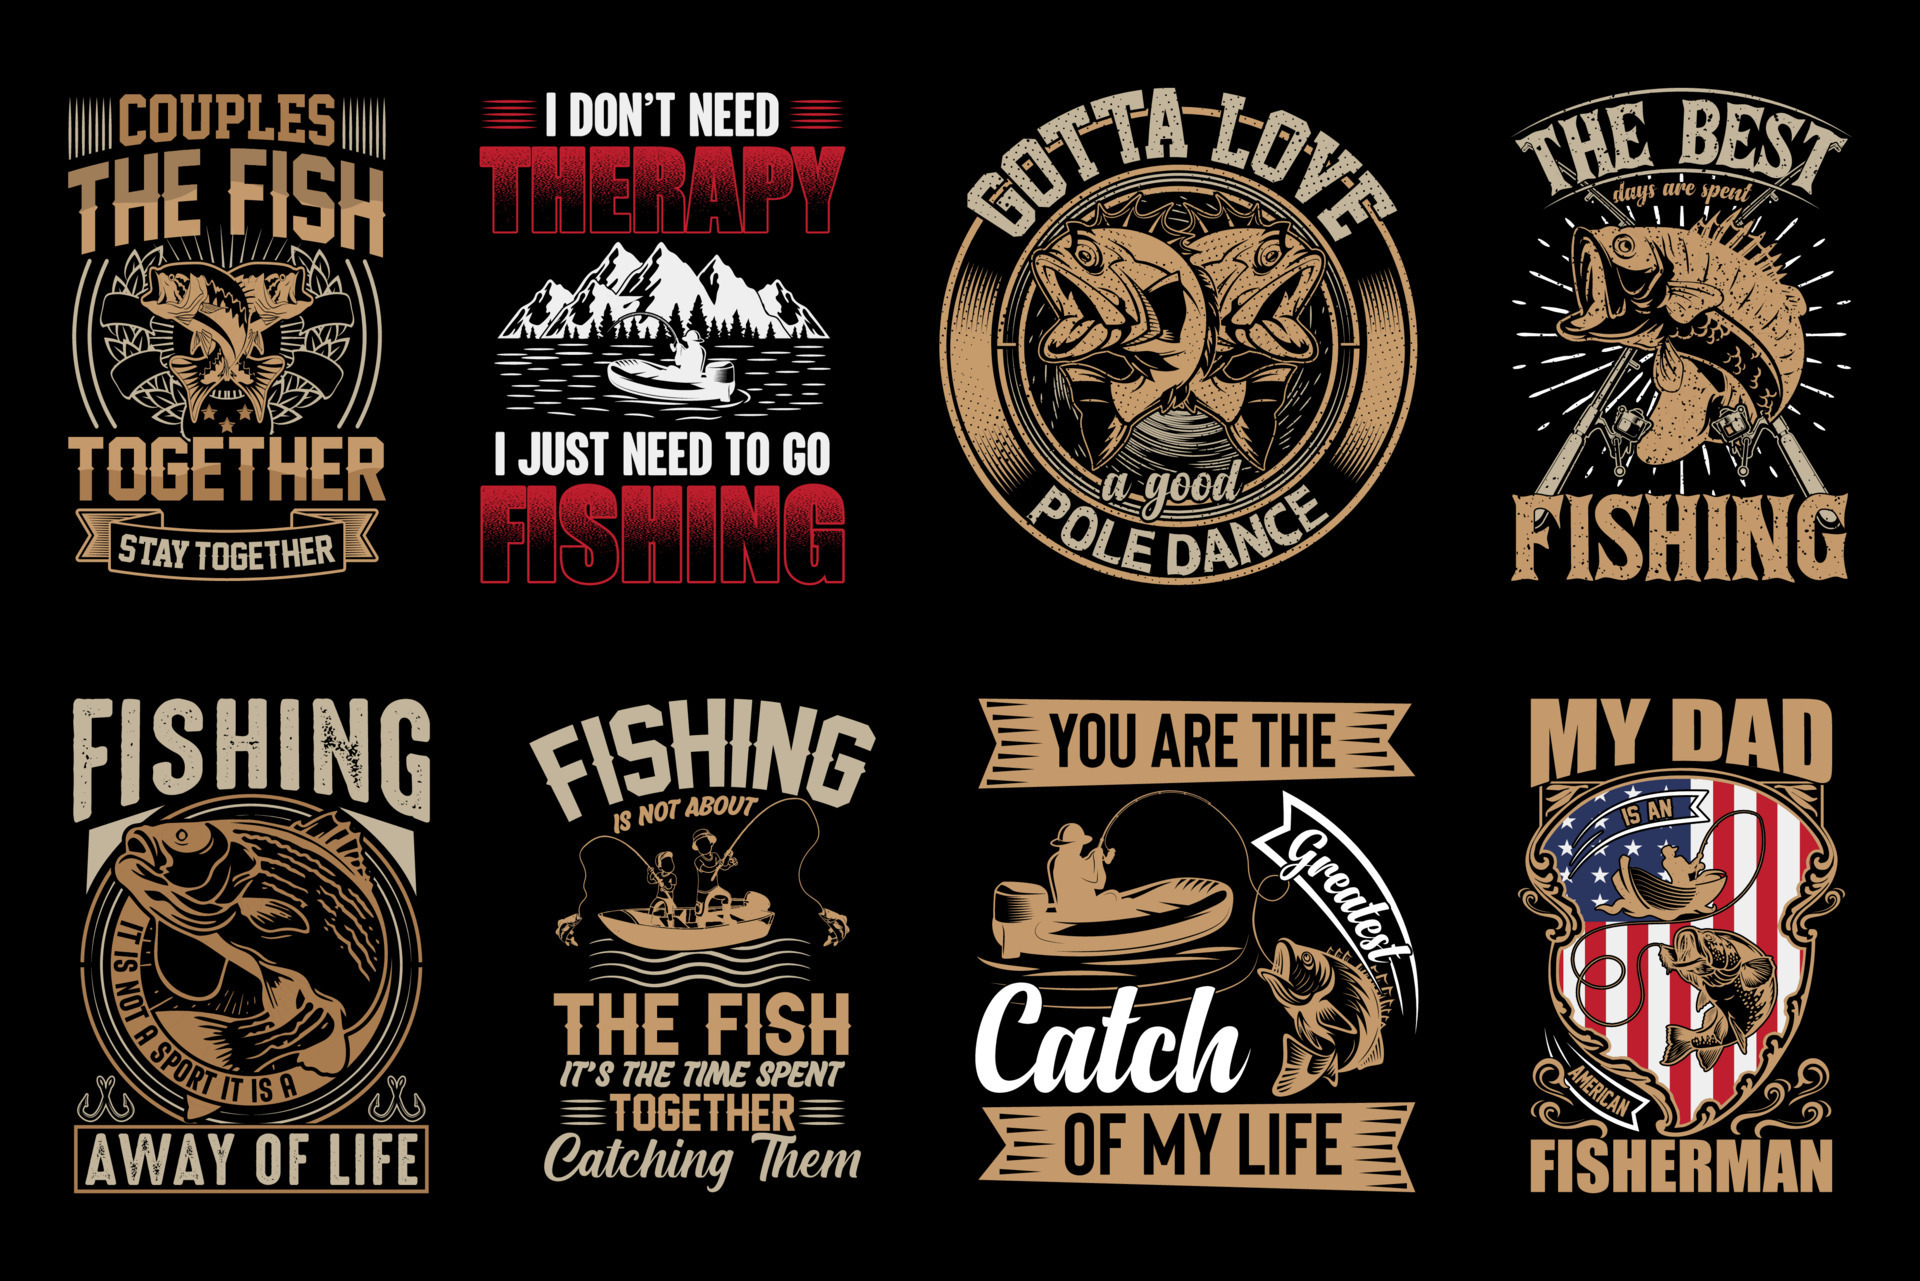 https://static.vecteezy.com/system/resources/previews/009/496/336/original/fishing-t-shirt-design-bundle-fish-lover-illustration-trendy-t-shirts-vector.jpg